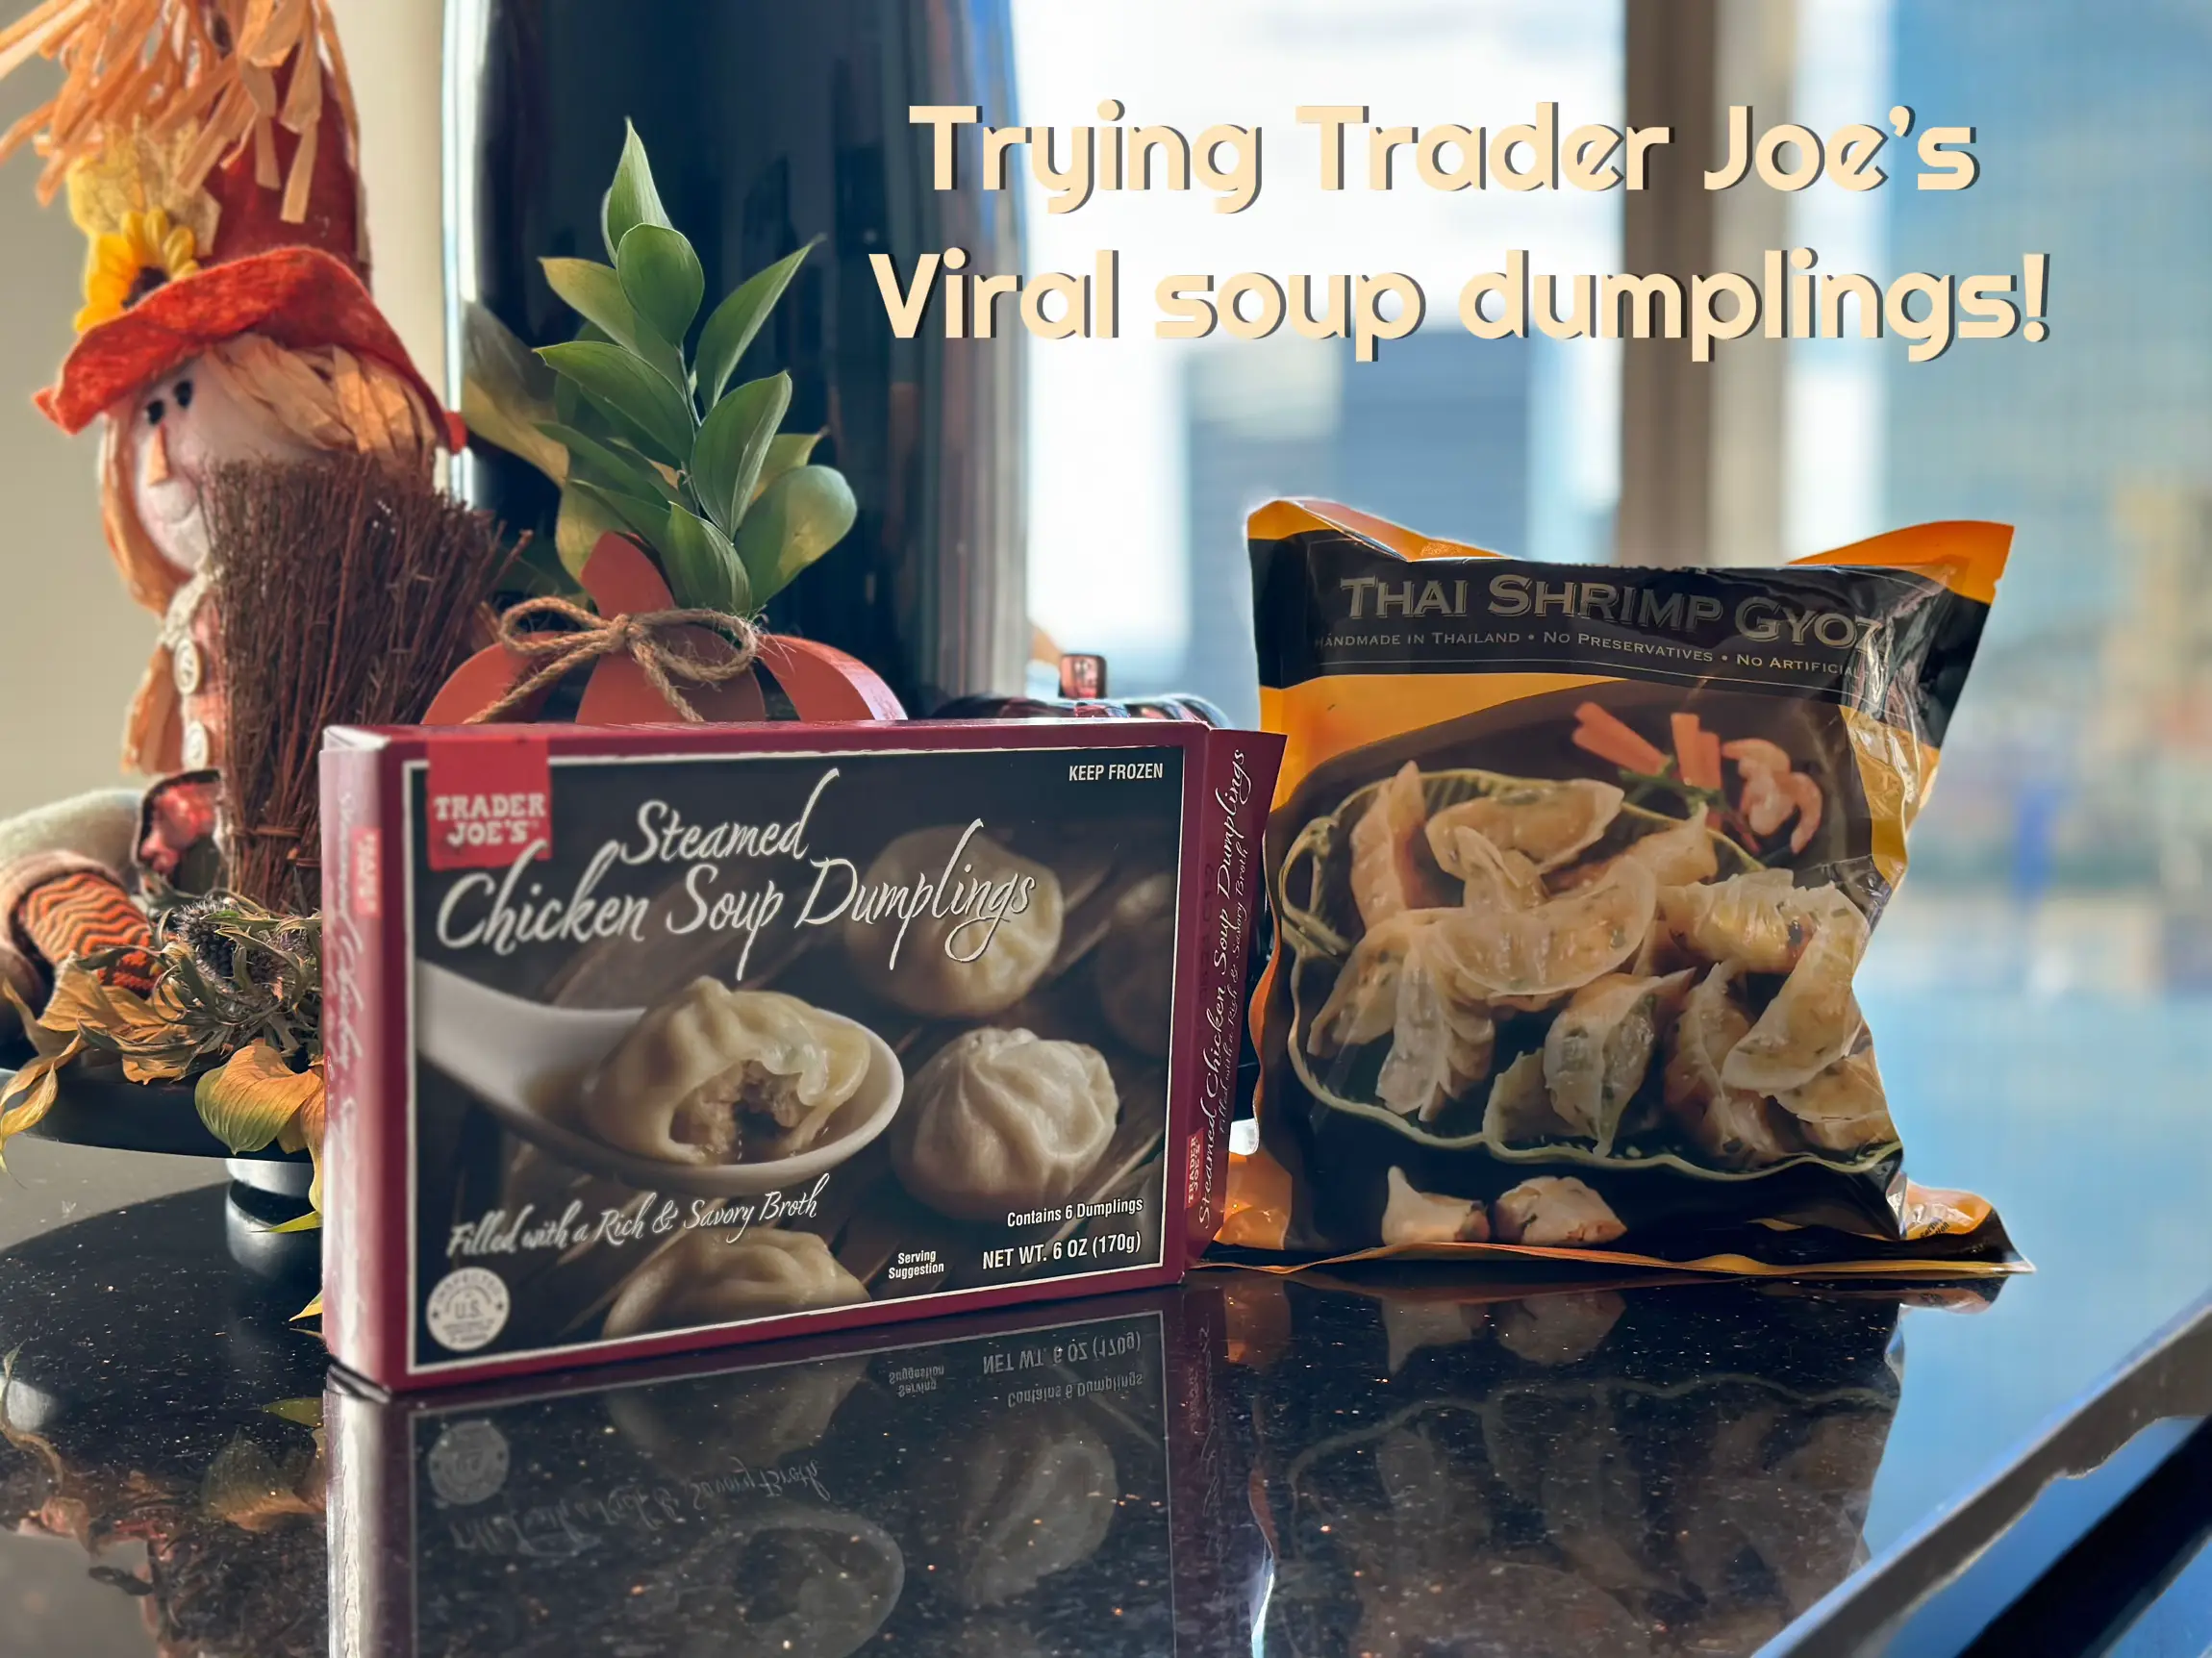  Trader Joe's Steamed Chicken Soup Dumplings (Pack of